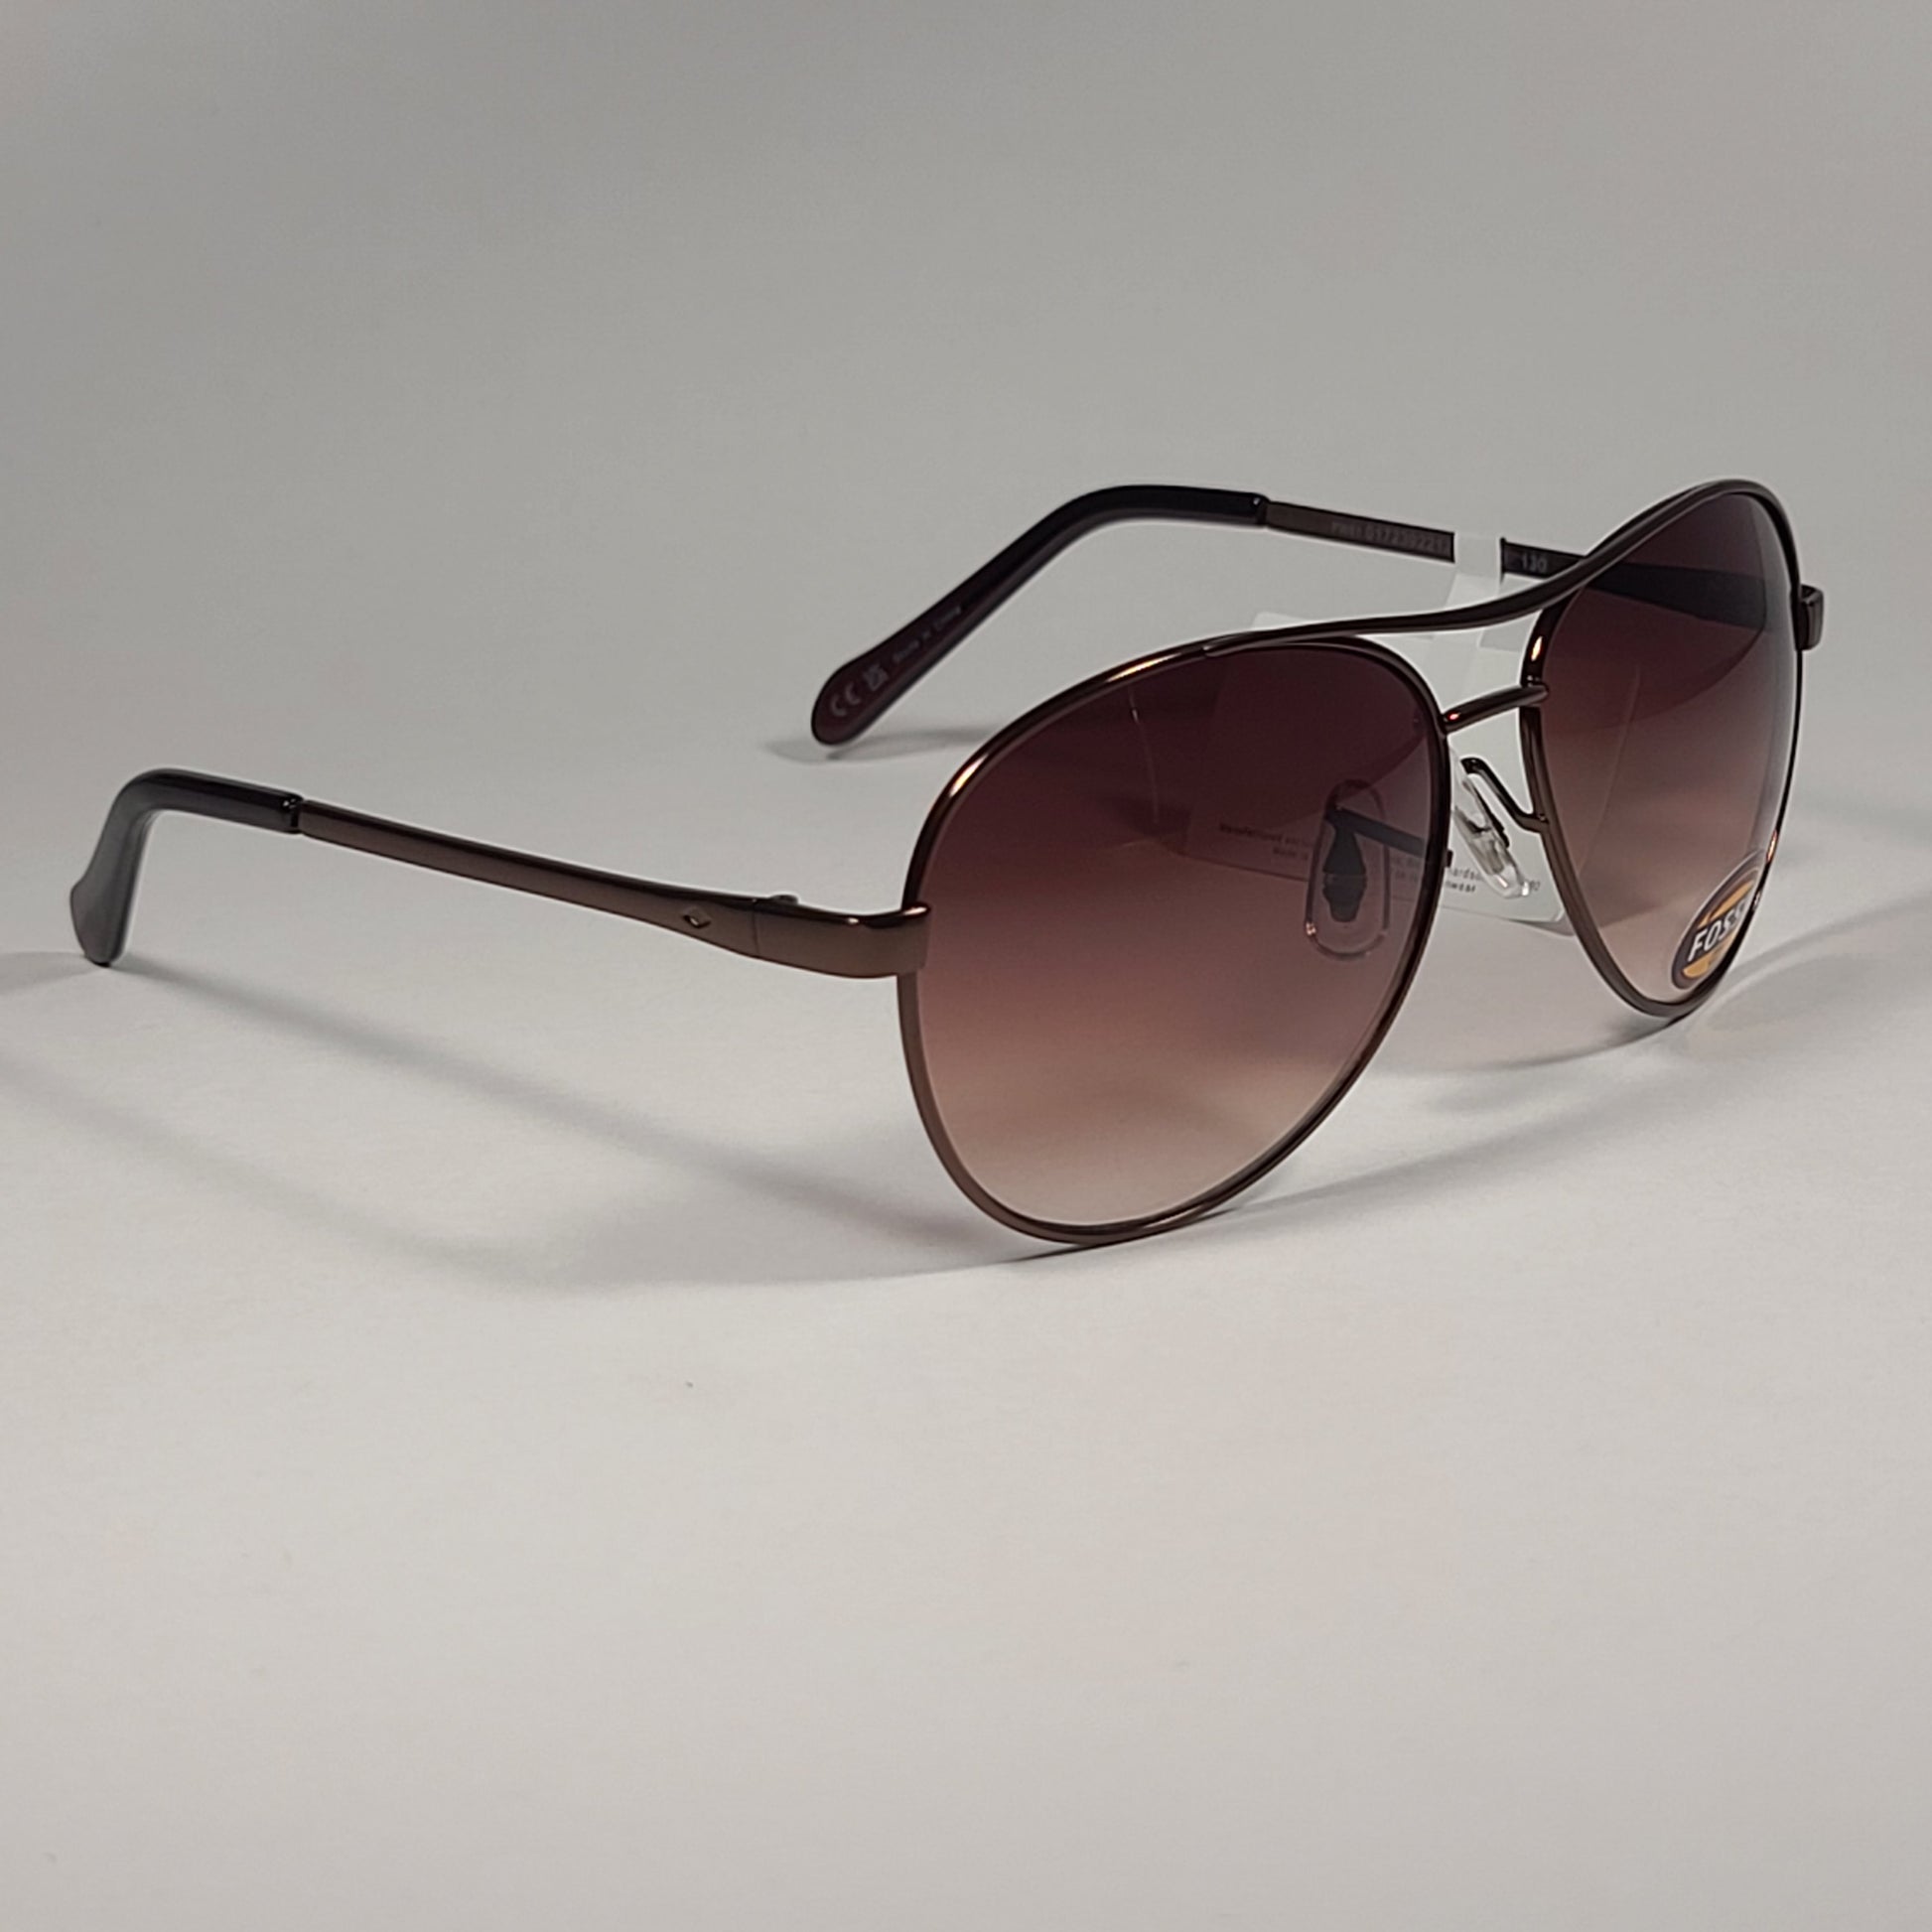 Fossil FW51 Pilot Sunglasses Brown Bronze Frame / Brown Gradient Lens - Sunglasses